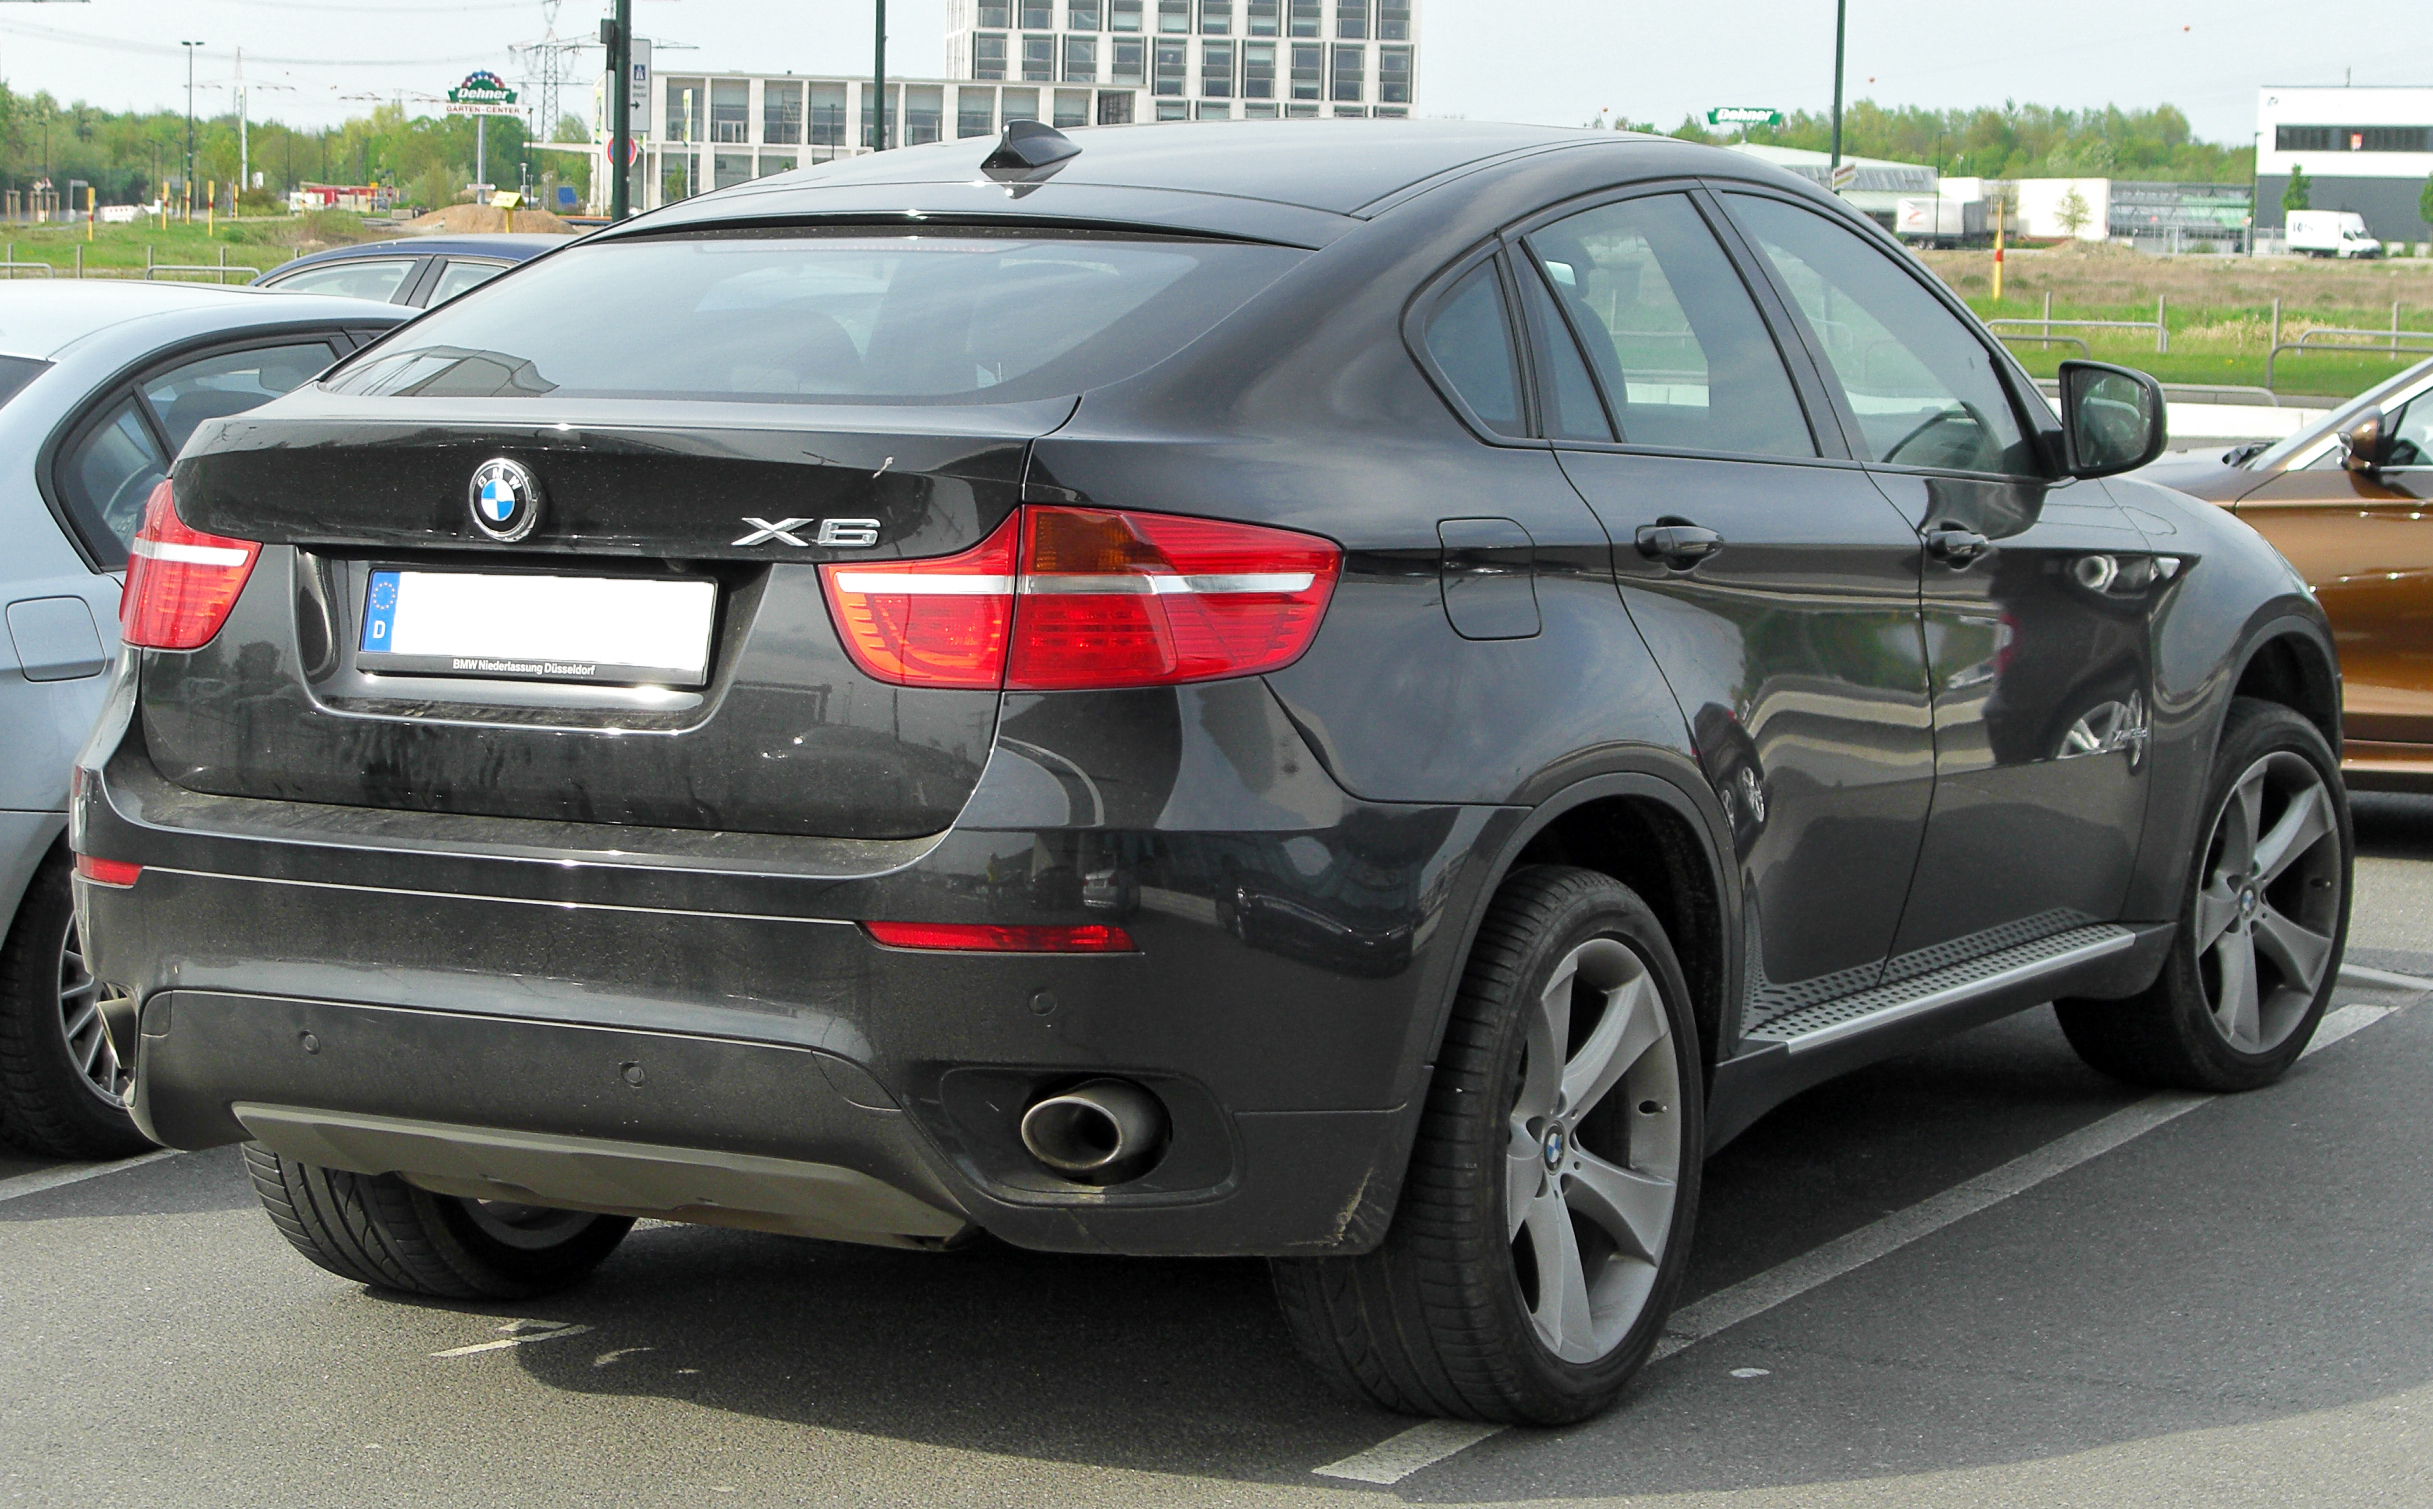 File:BMW X6 xDrive35d rear 20100425.jpg